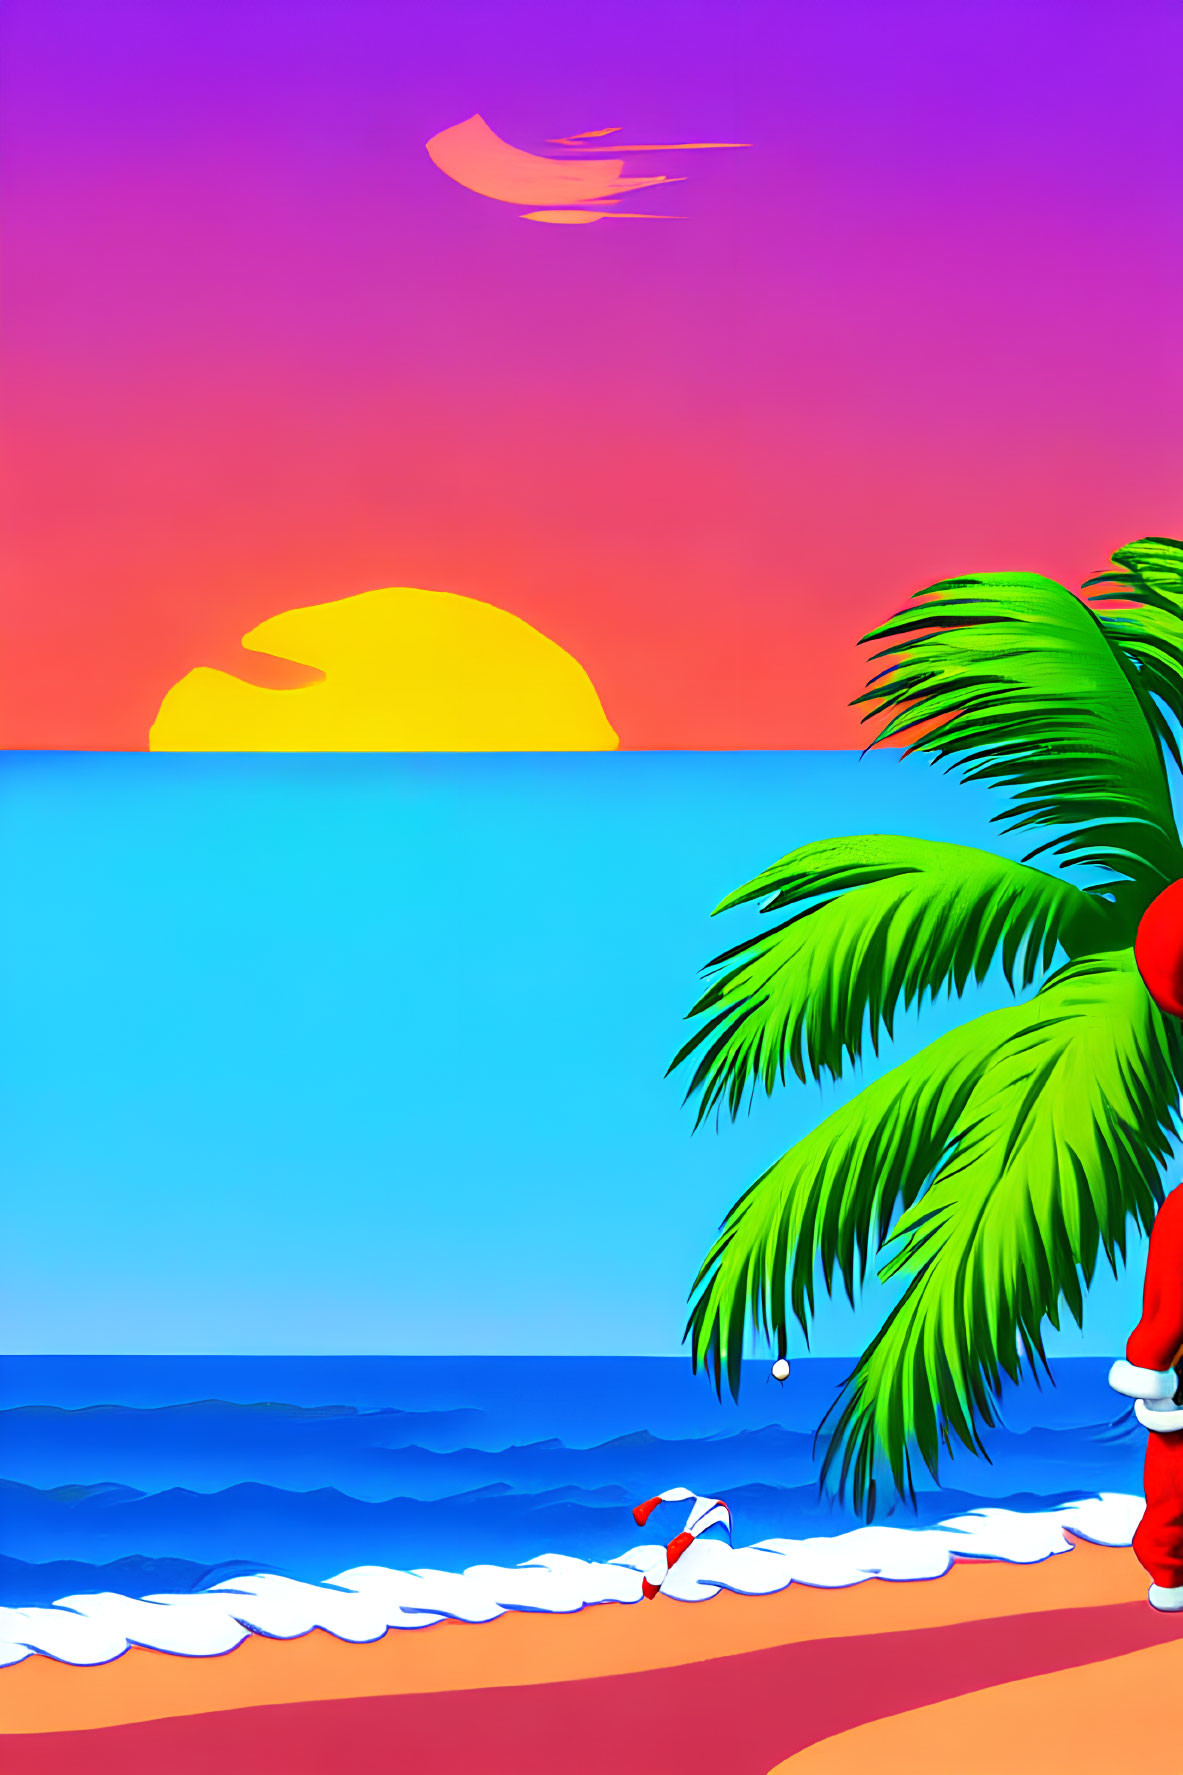 Colorful digital beach scene with palm tree, sun, and Santa hat figure